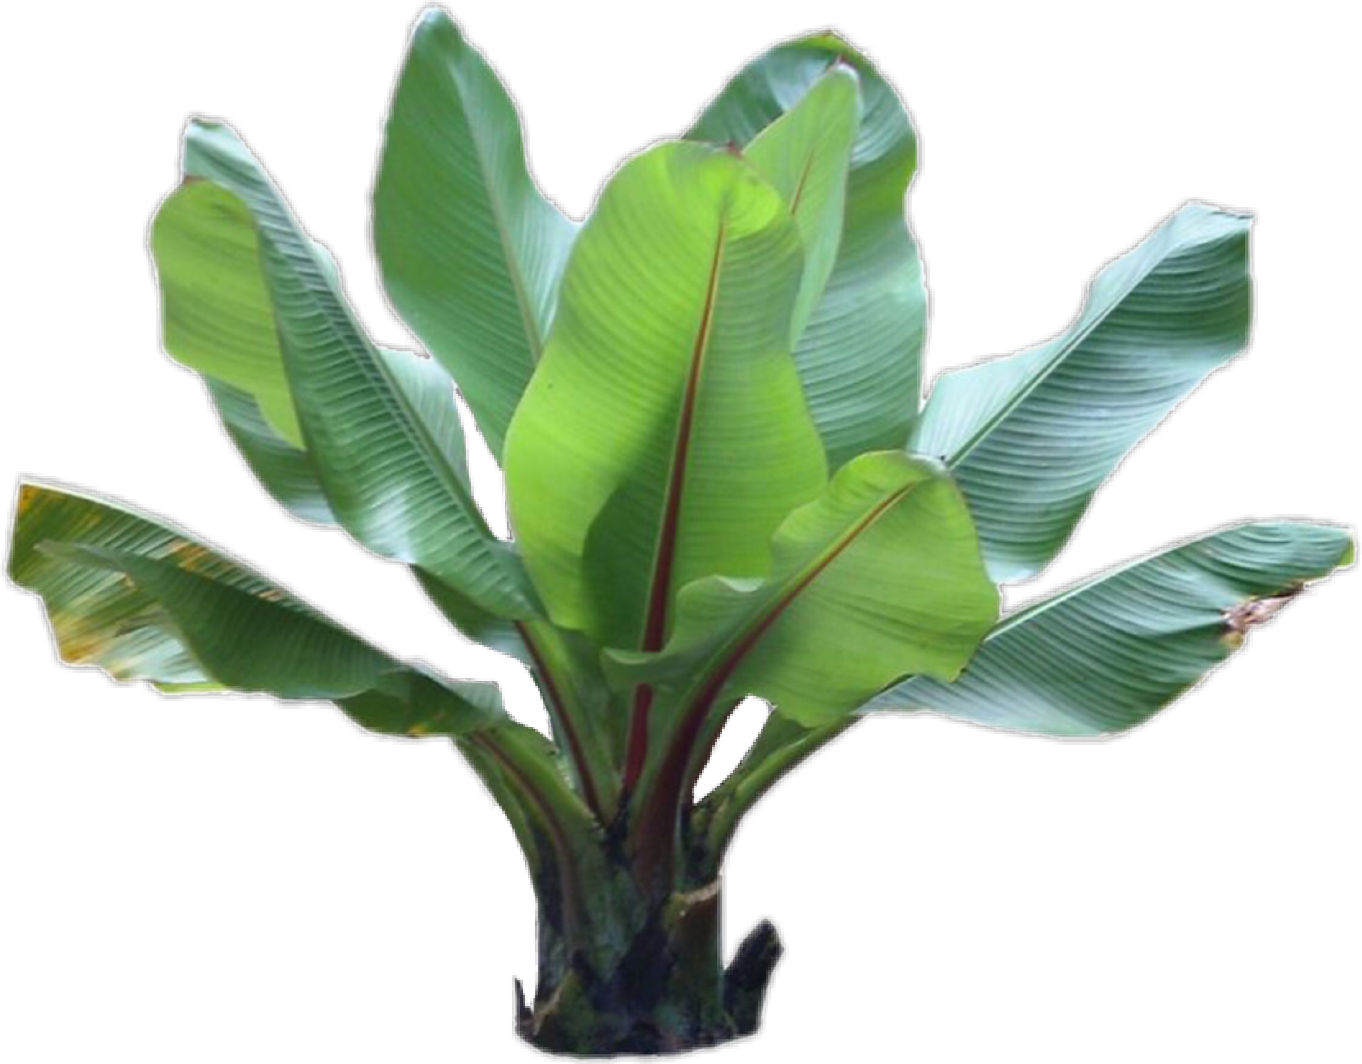 Tropical plant. Тропические растения. Тропические листья. Листья экзотических растений. Тропическические растения.